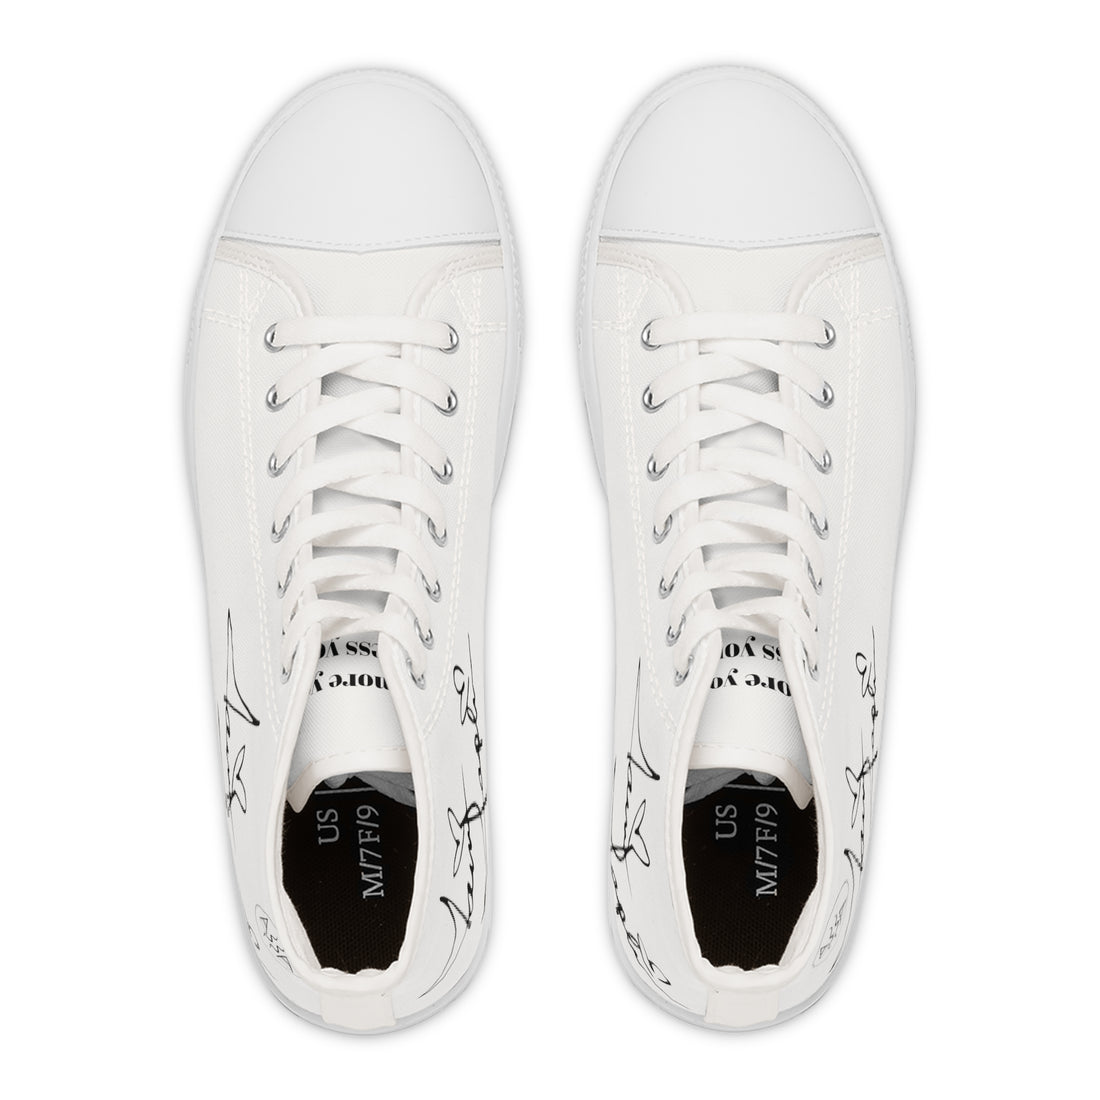 Sneakers ECO Janis Joplin -Blanco